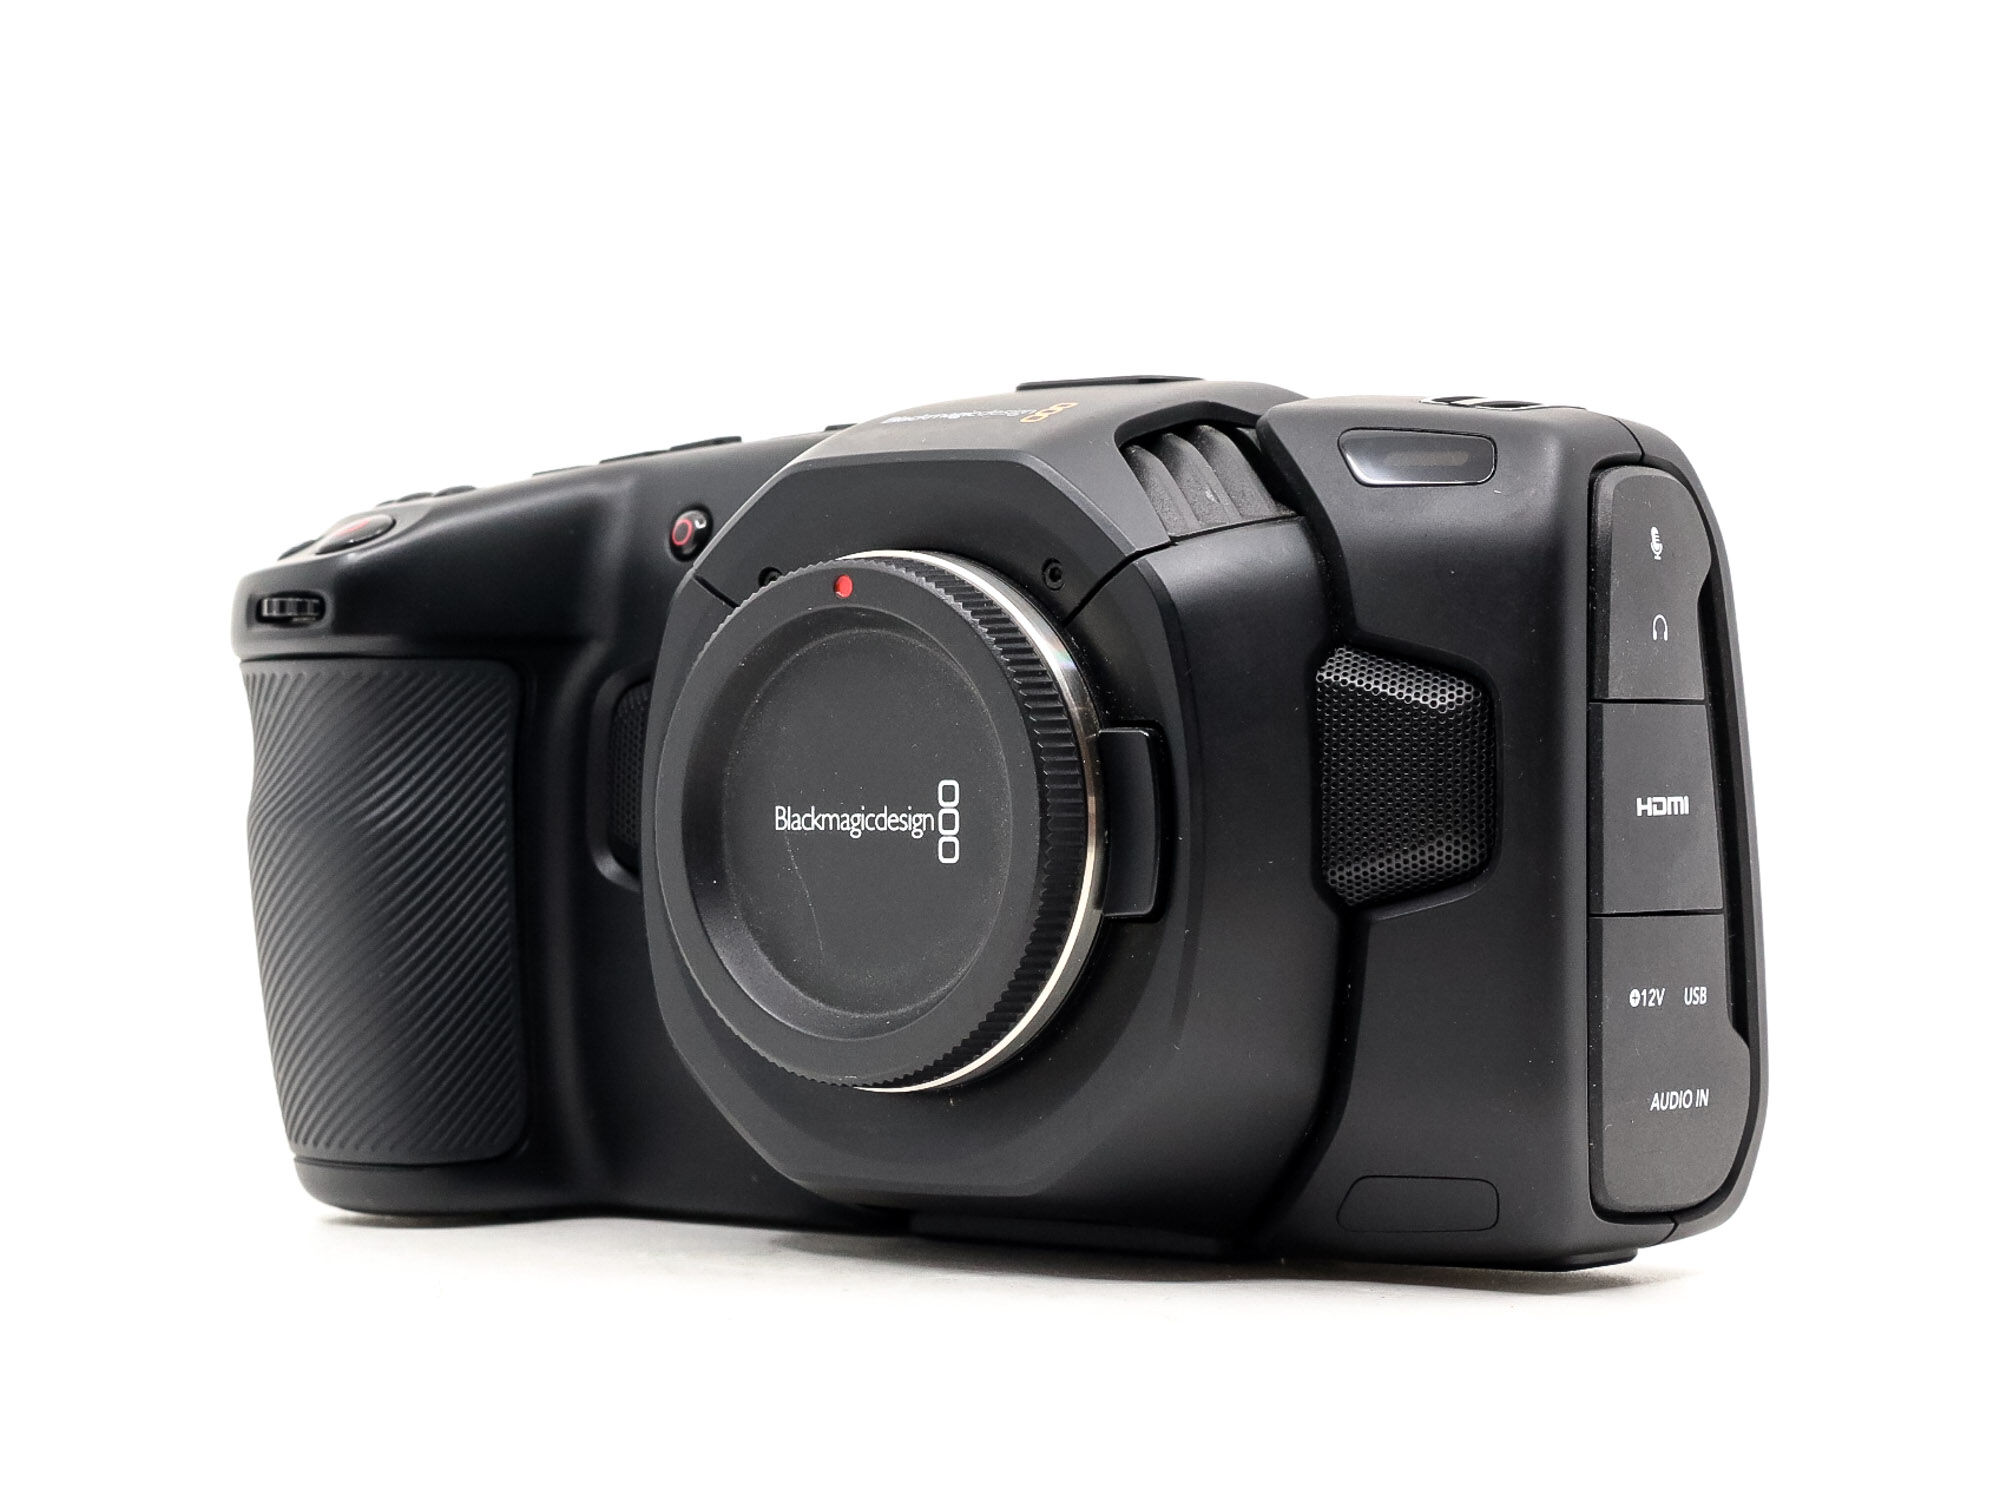 blackmagic design pocket cinema camera 4k (condition: excellent)